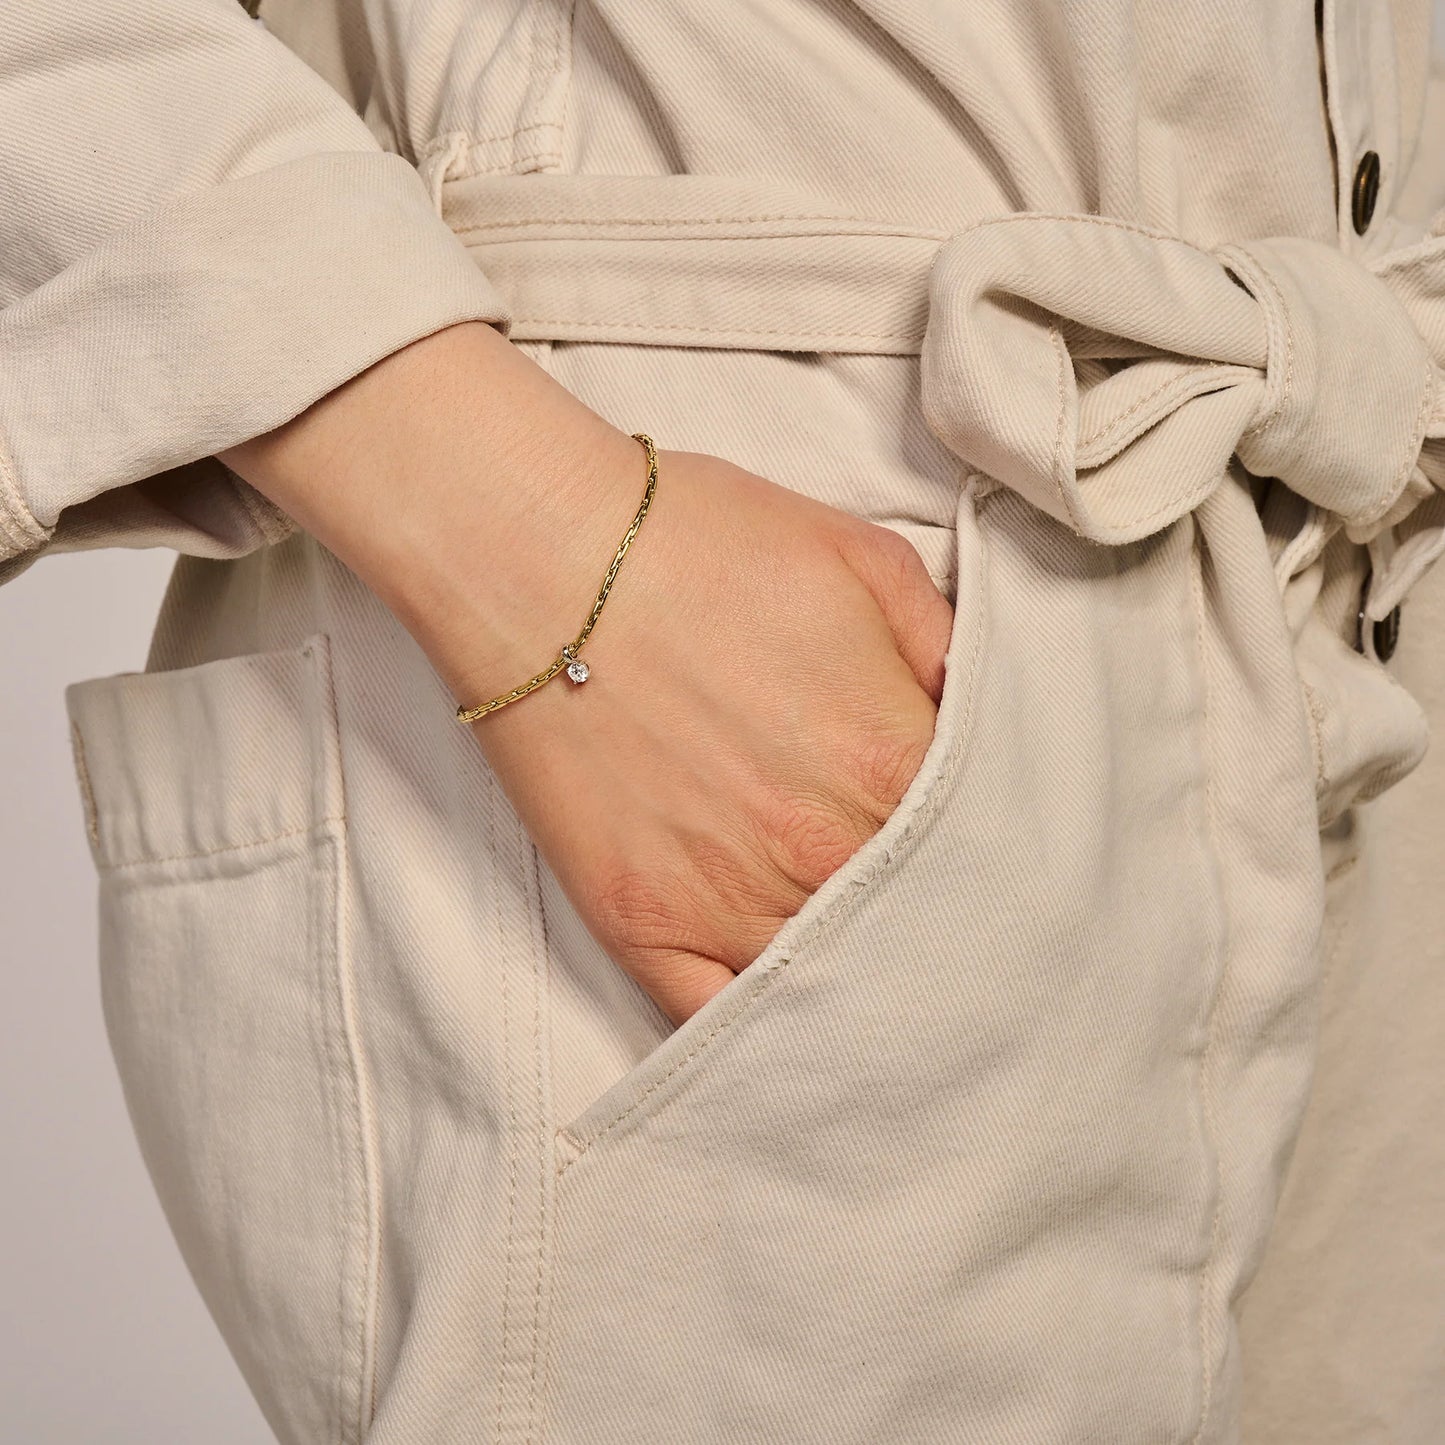 Blush Bracelet 2156YZI - 14k Gold and White Gold with Zirconia